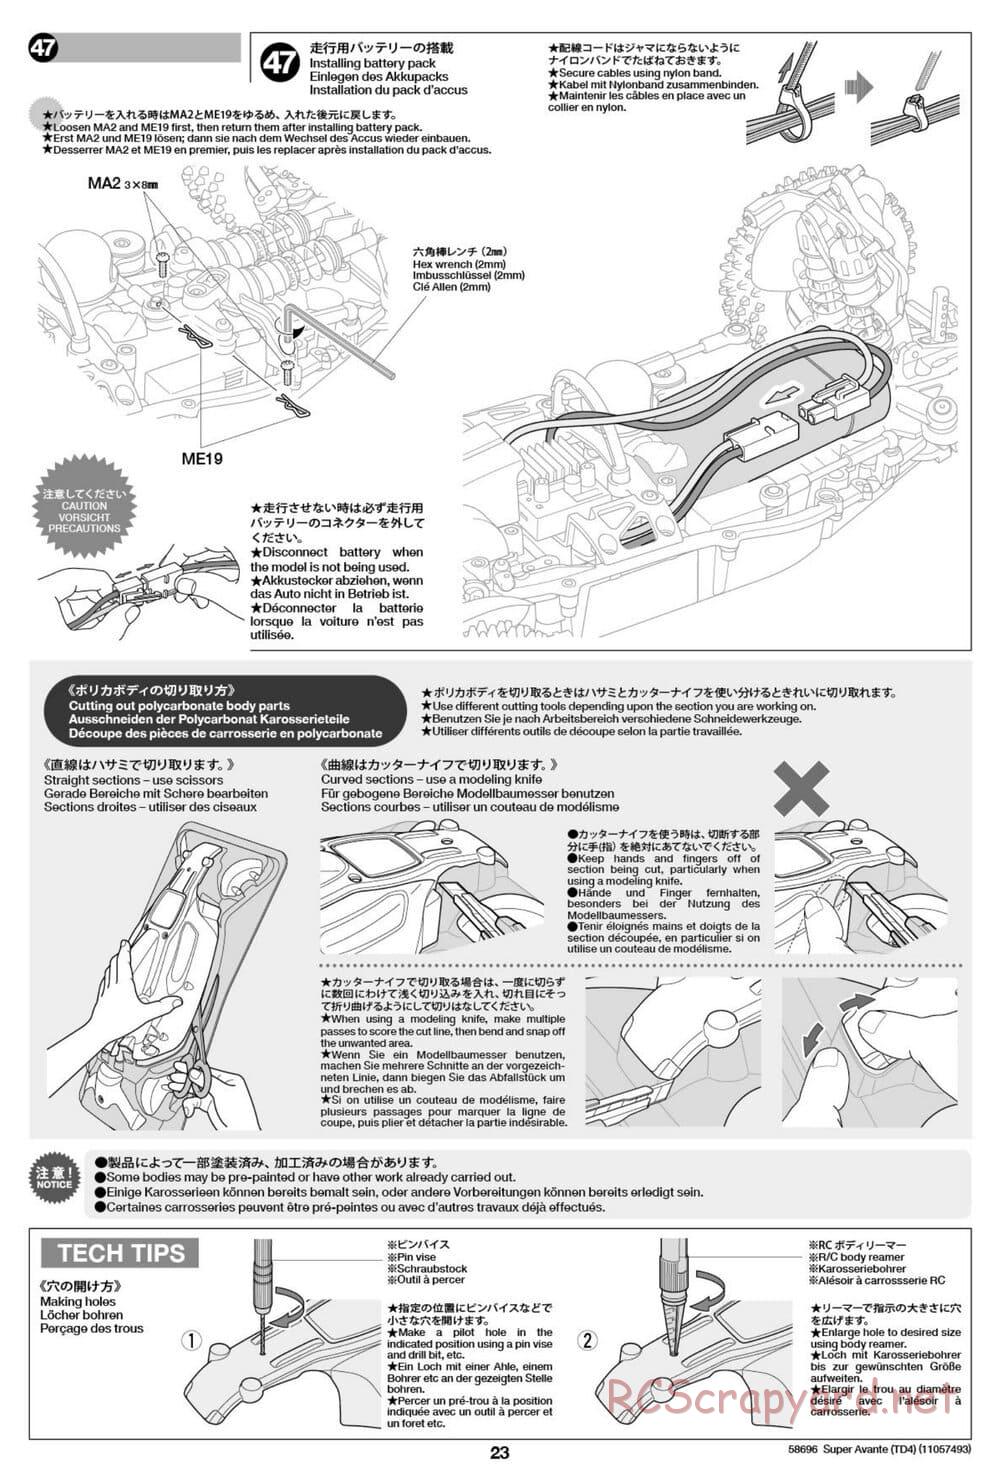 Tamiya - Super Avante - TD4 Chassis - Manual - Page 24